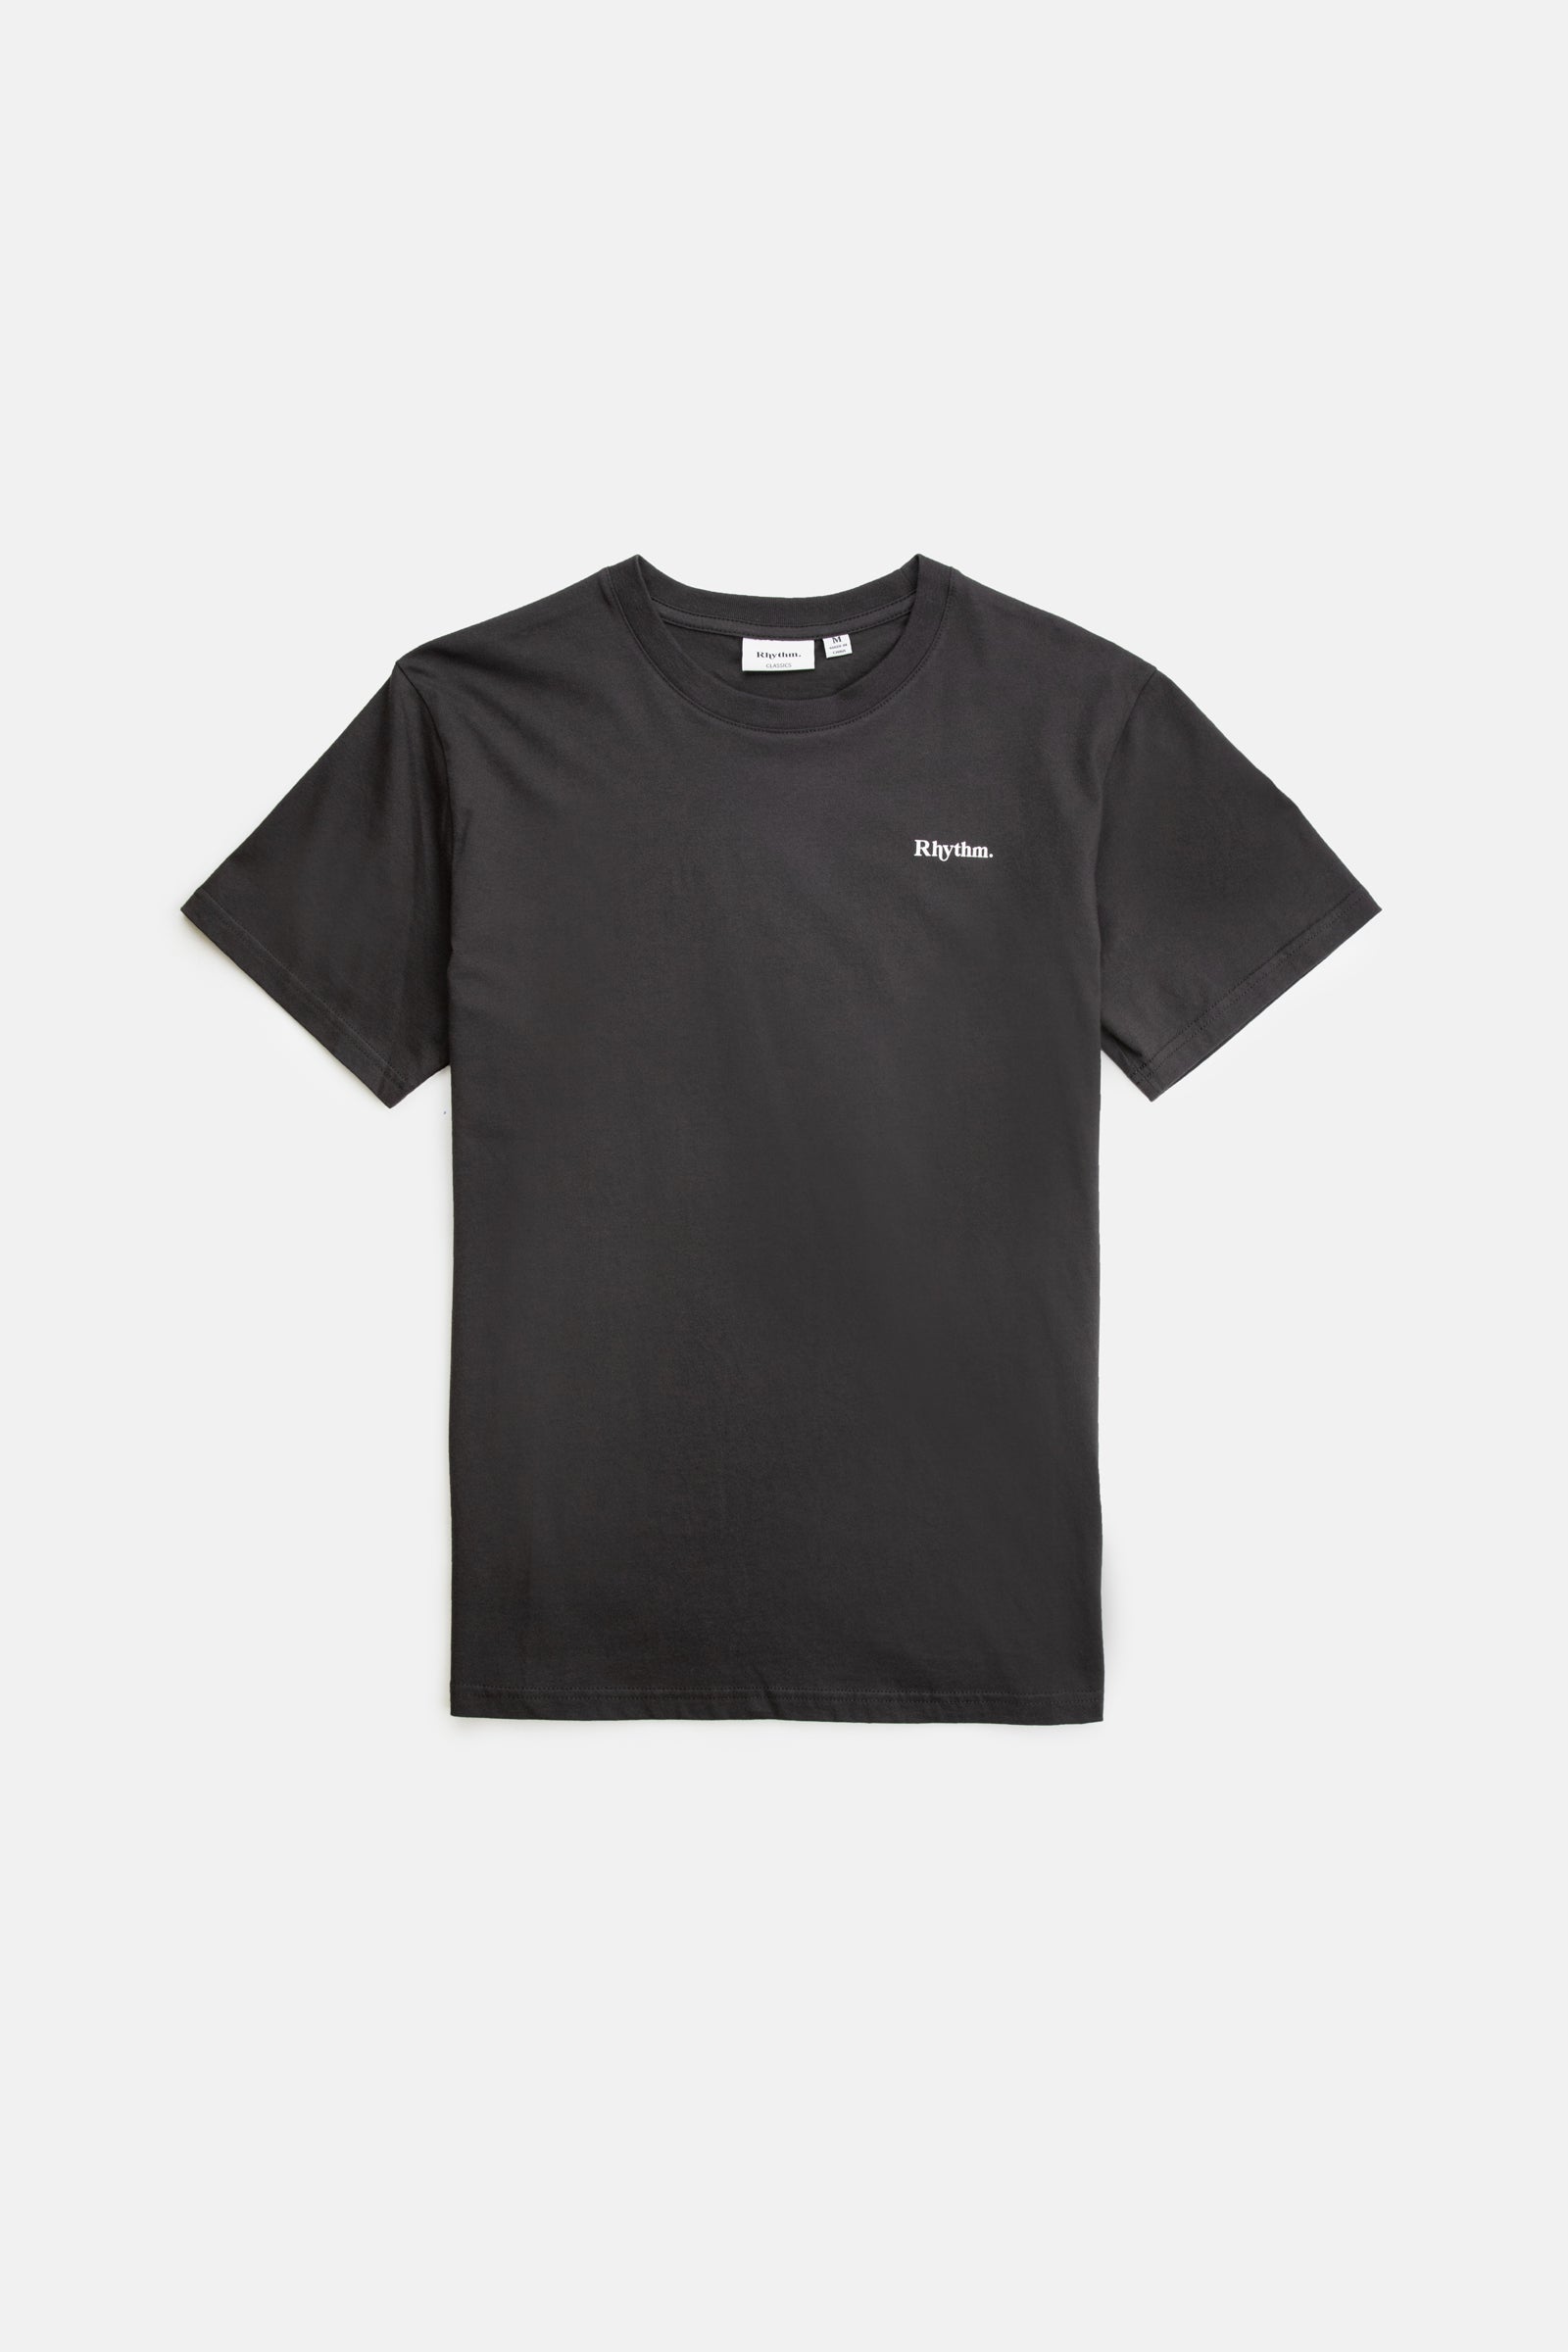 Höchste Priorität Organic Cotton Standard Script EU Rhythm Logo Black – T-Shirt